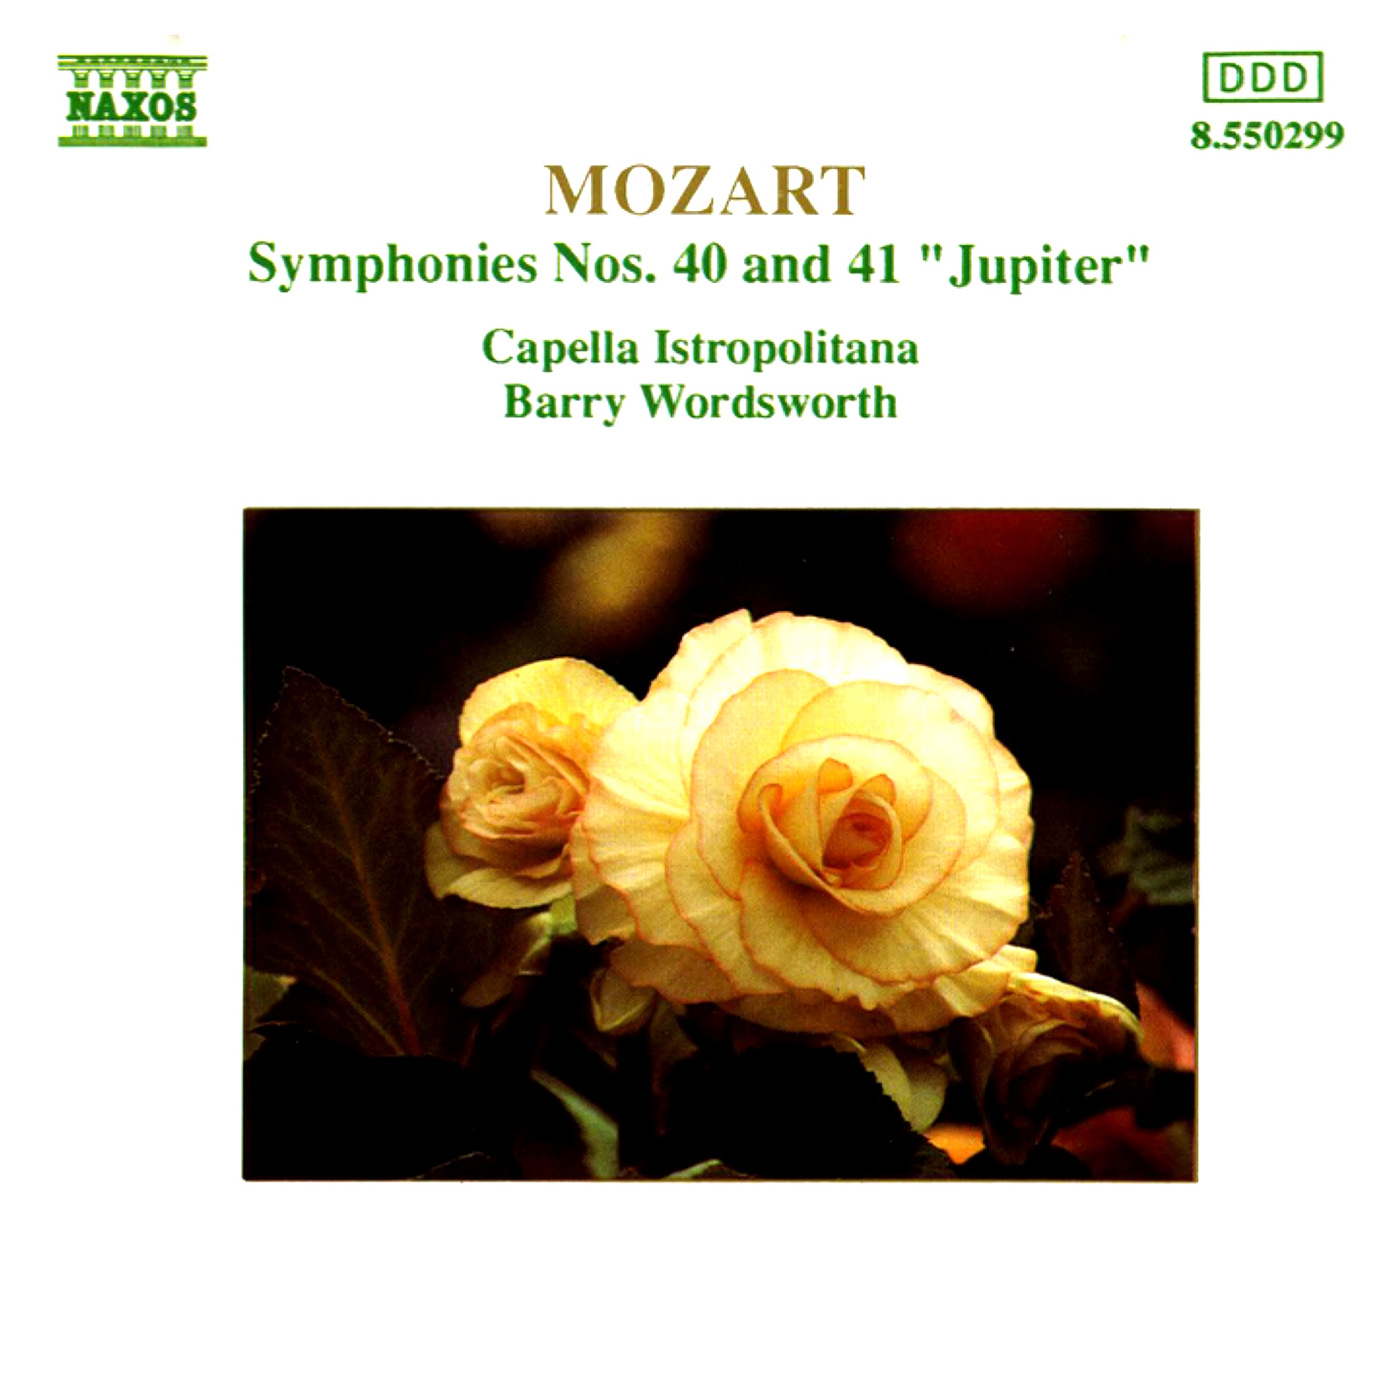 MOZART: Symphonies Nos. 40 and 41